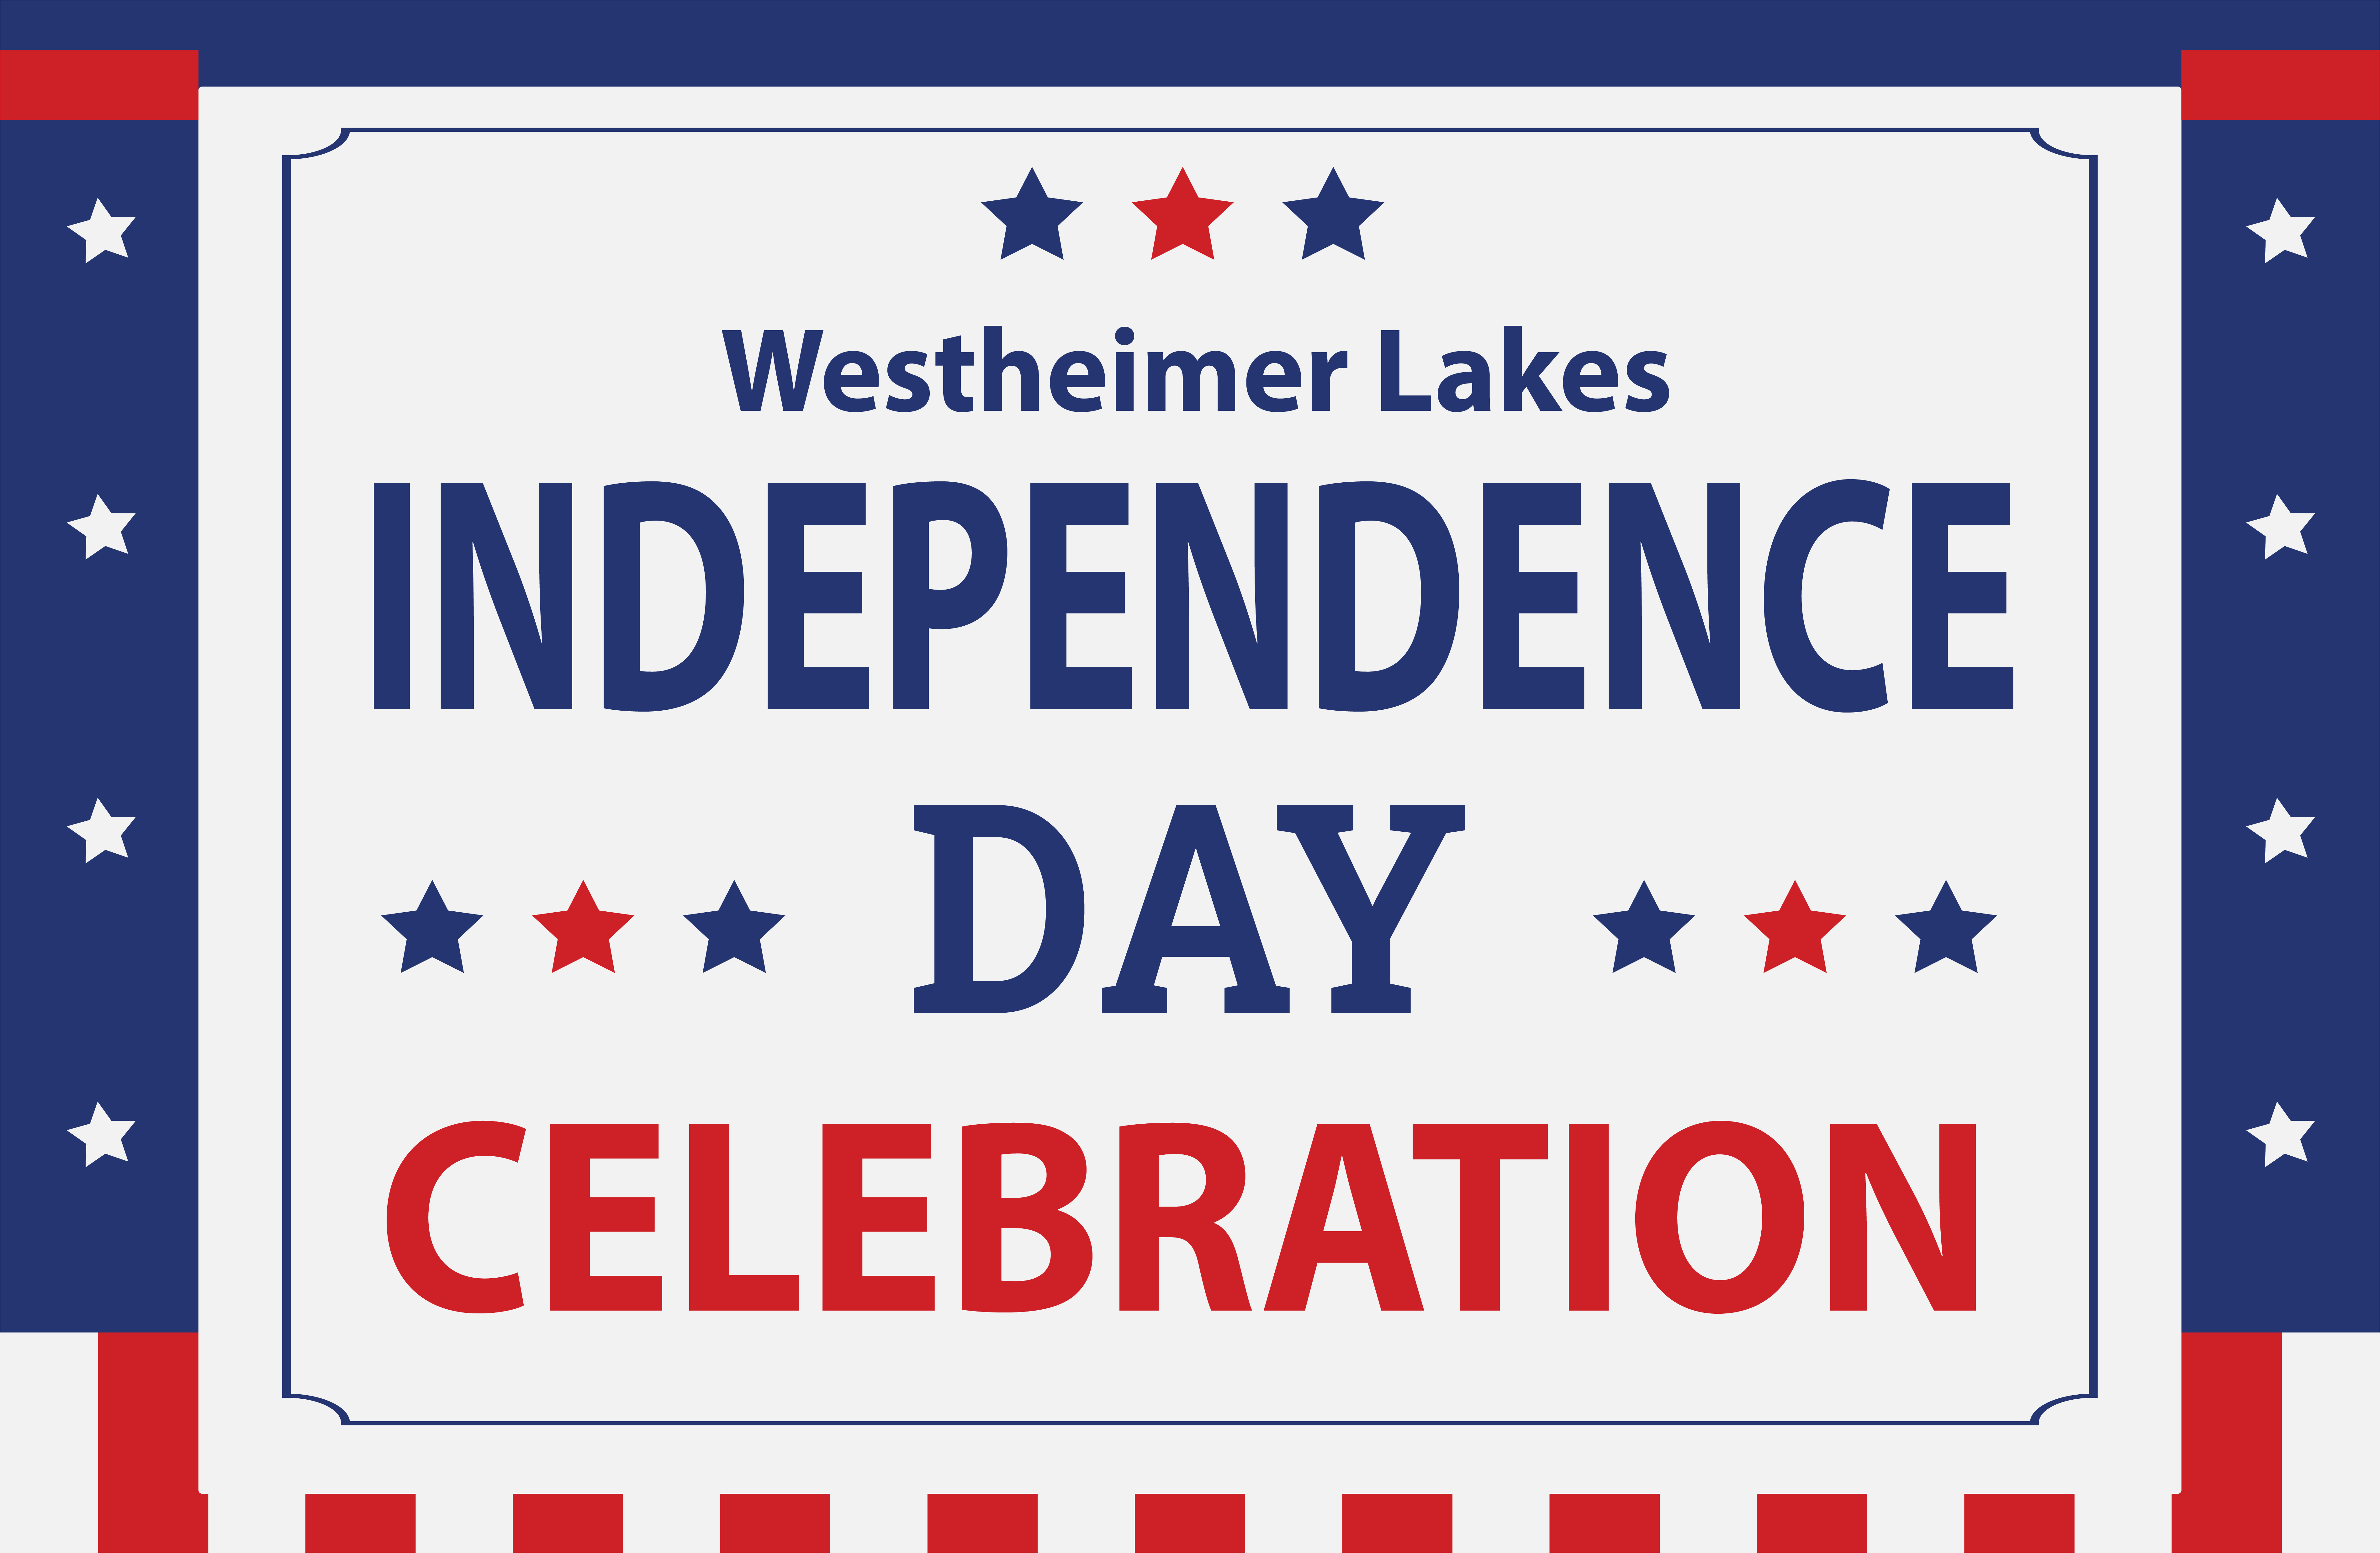 Westheimer Lakes Independence Day Celebration - July 1st